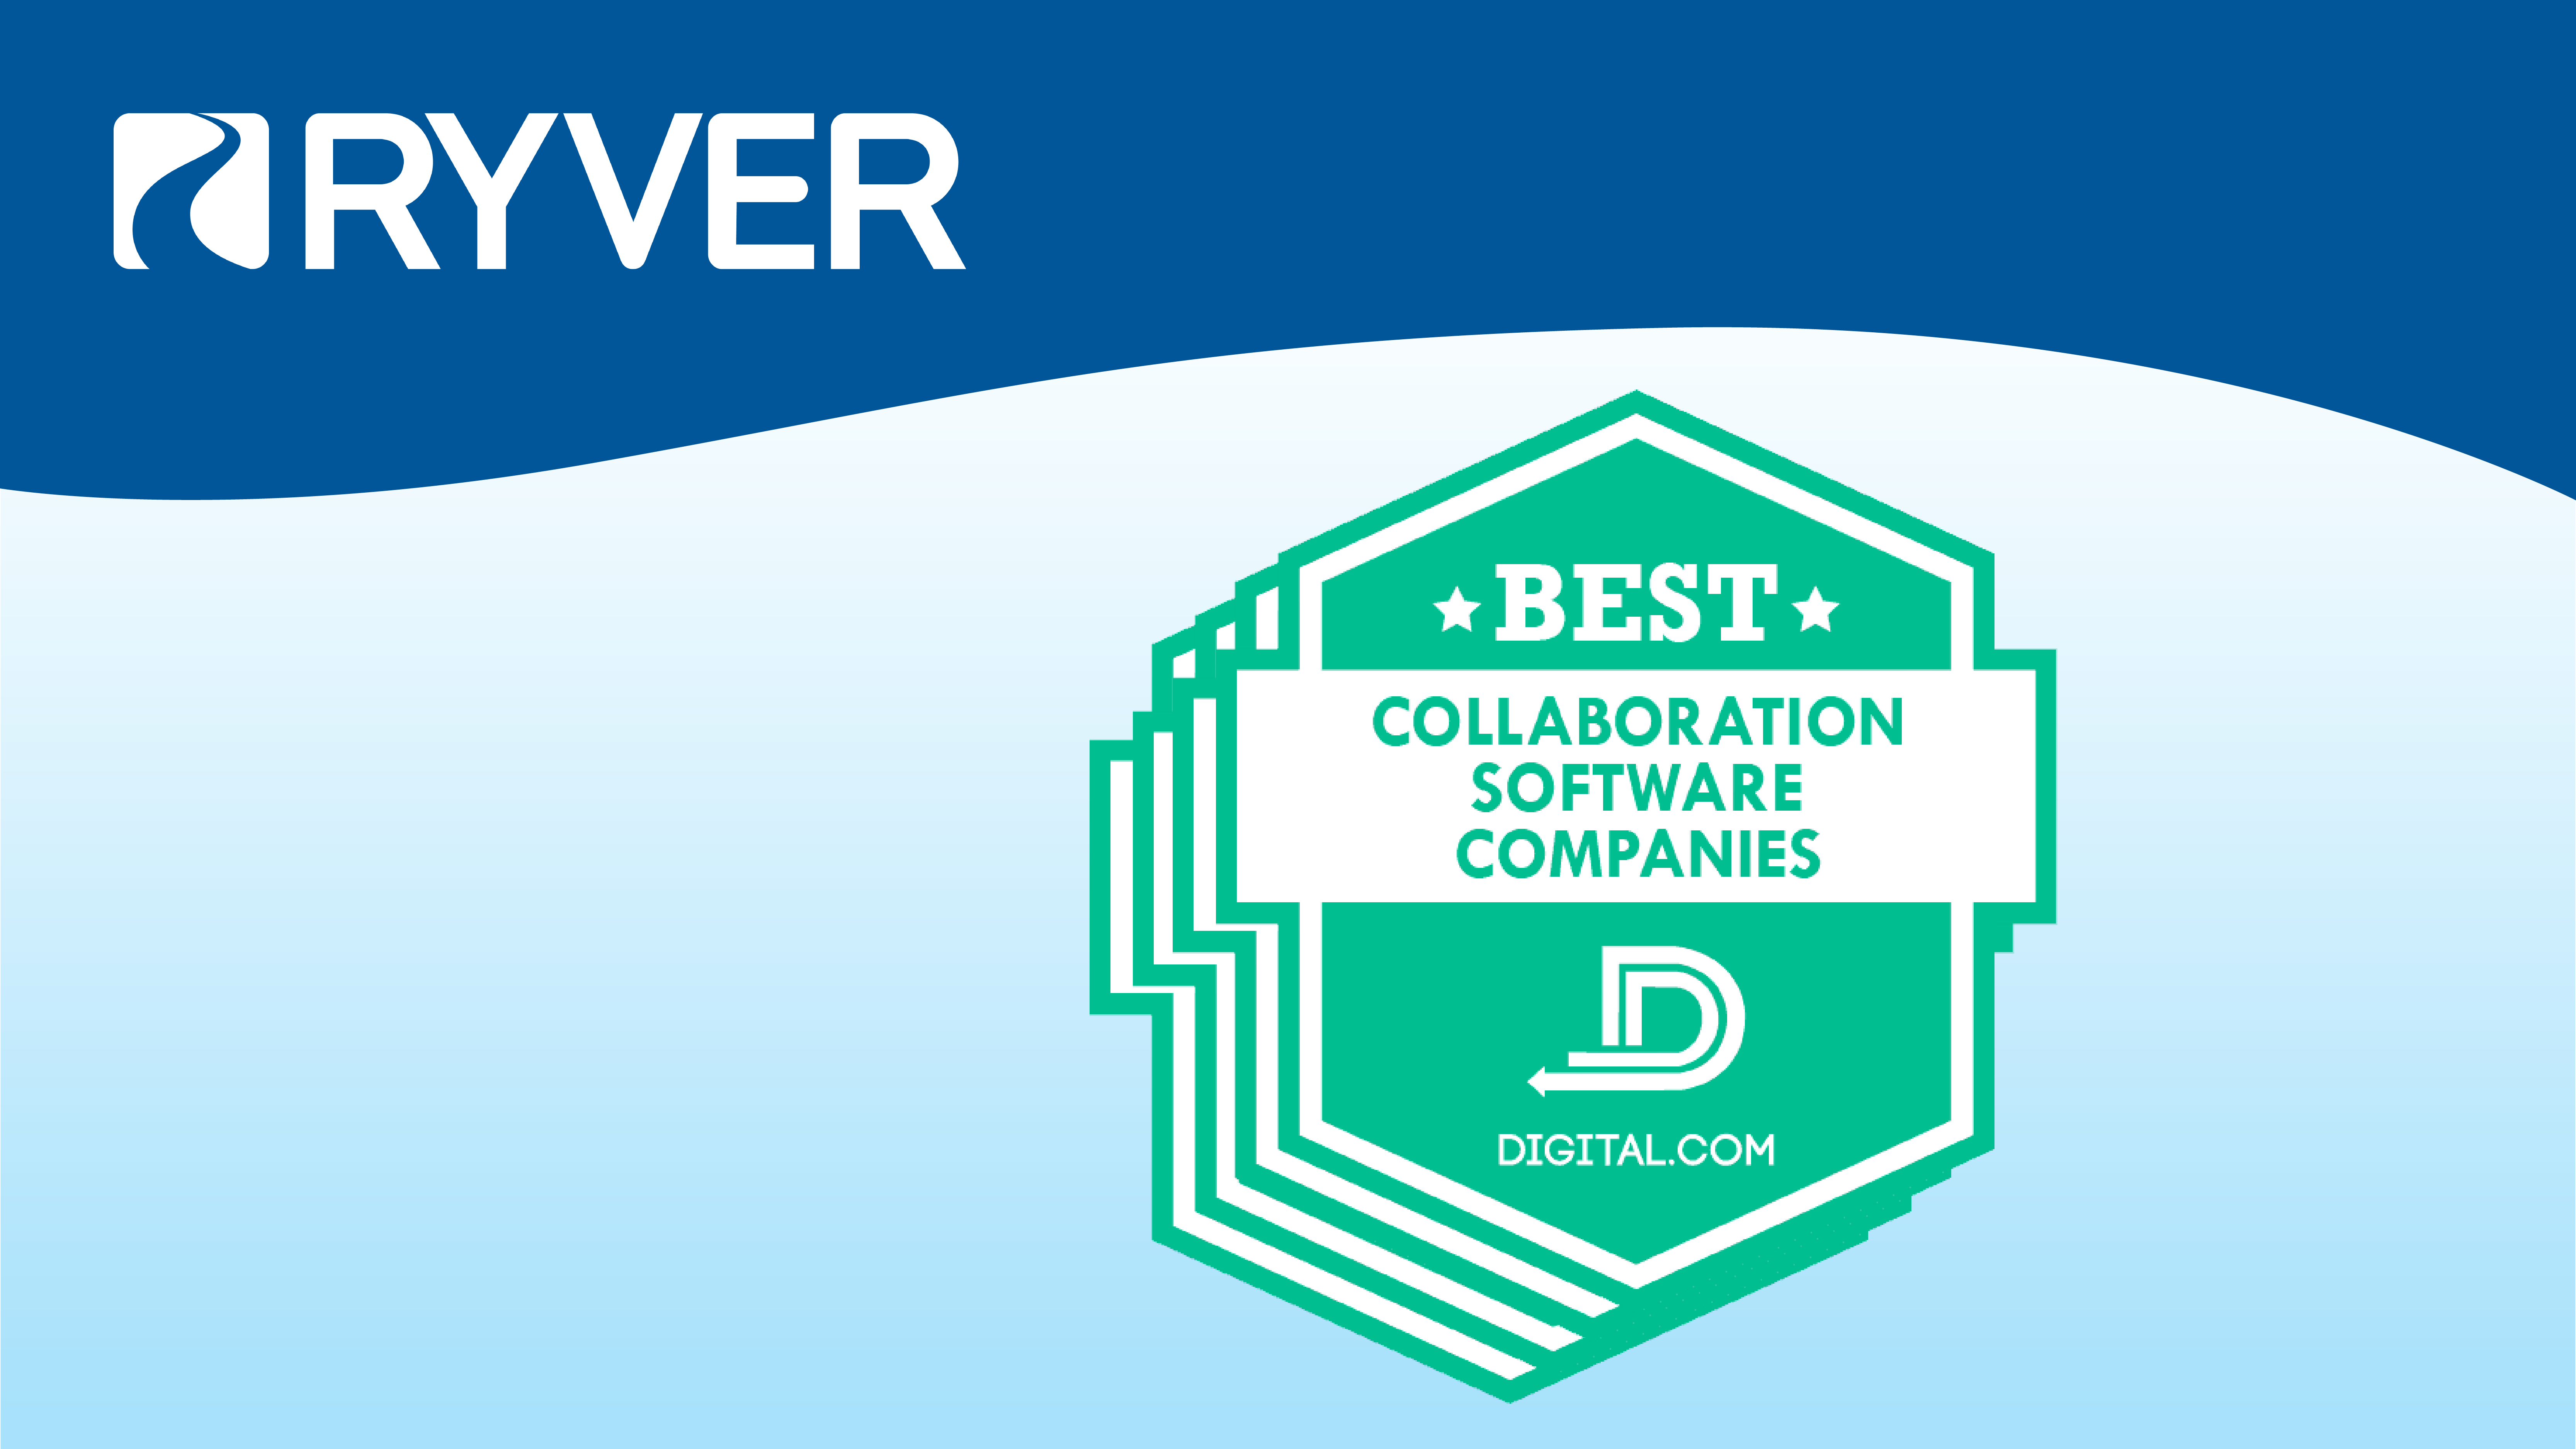 Ryver Best Collaboration Software Companies Award | Digital.com